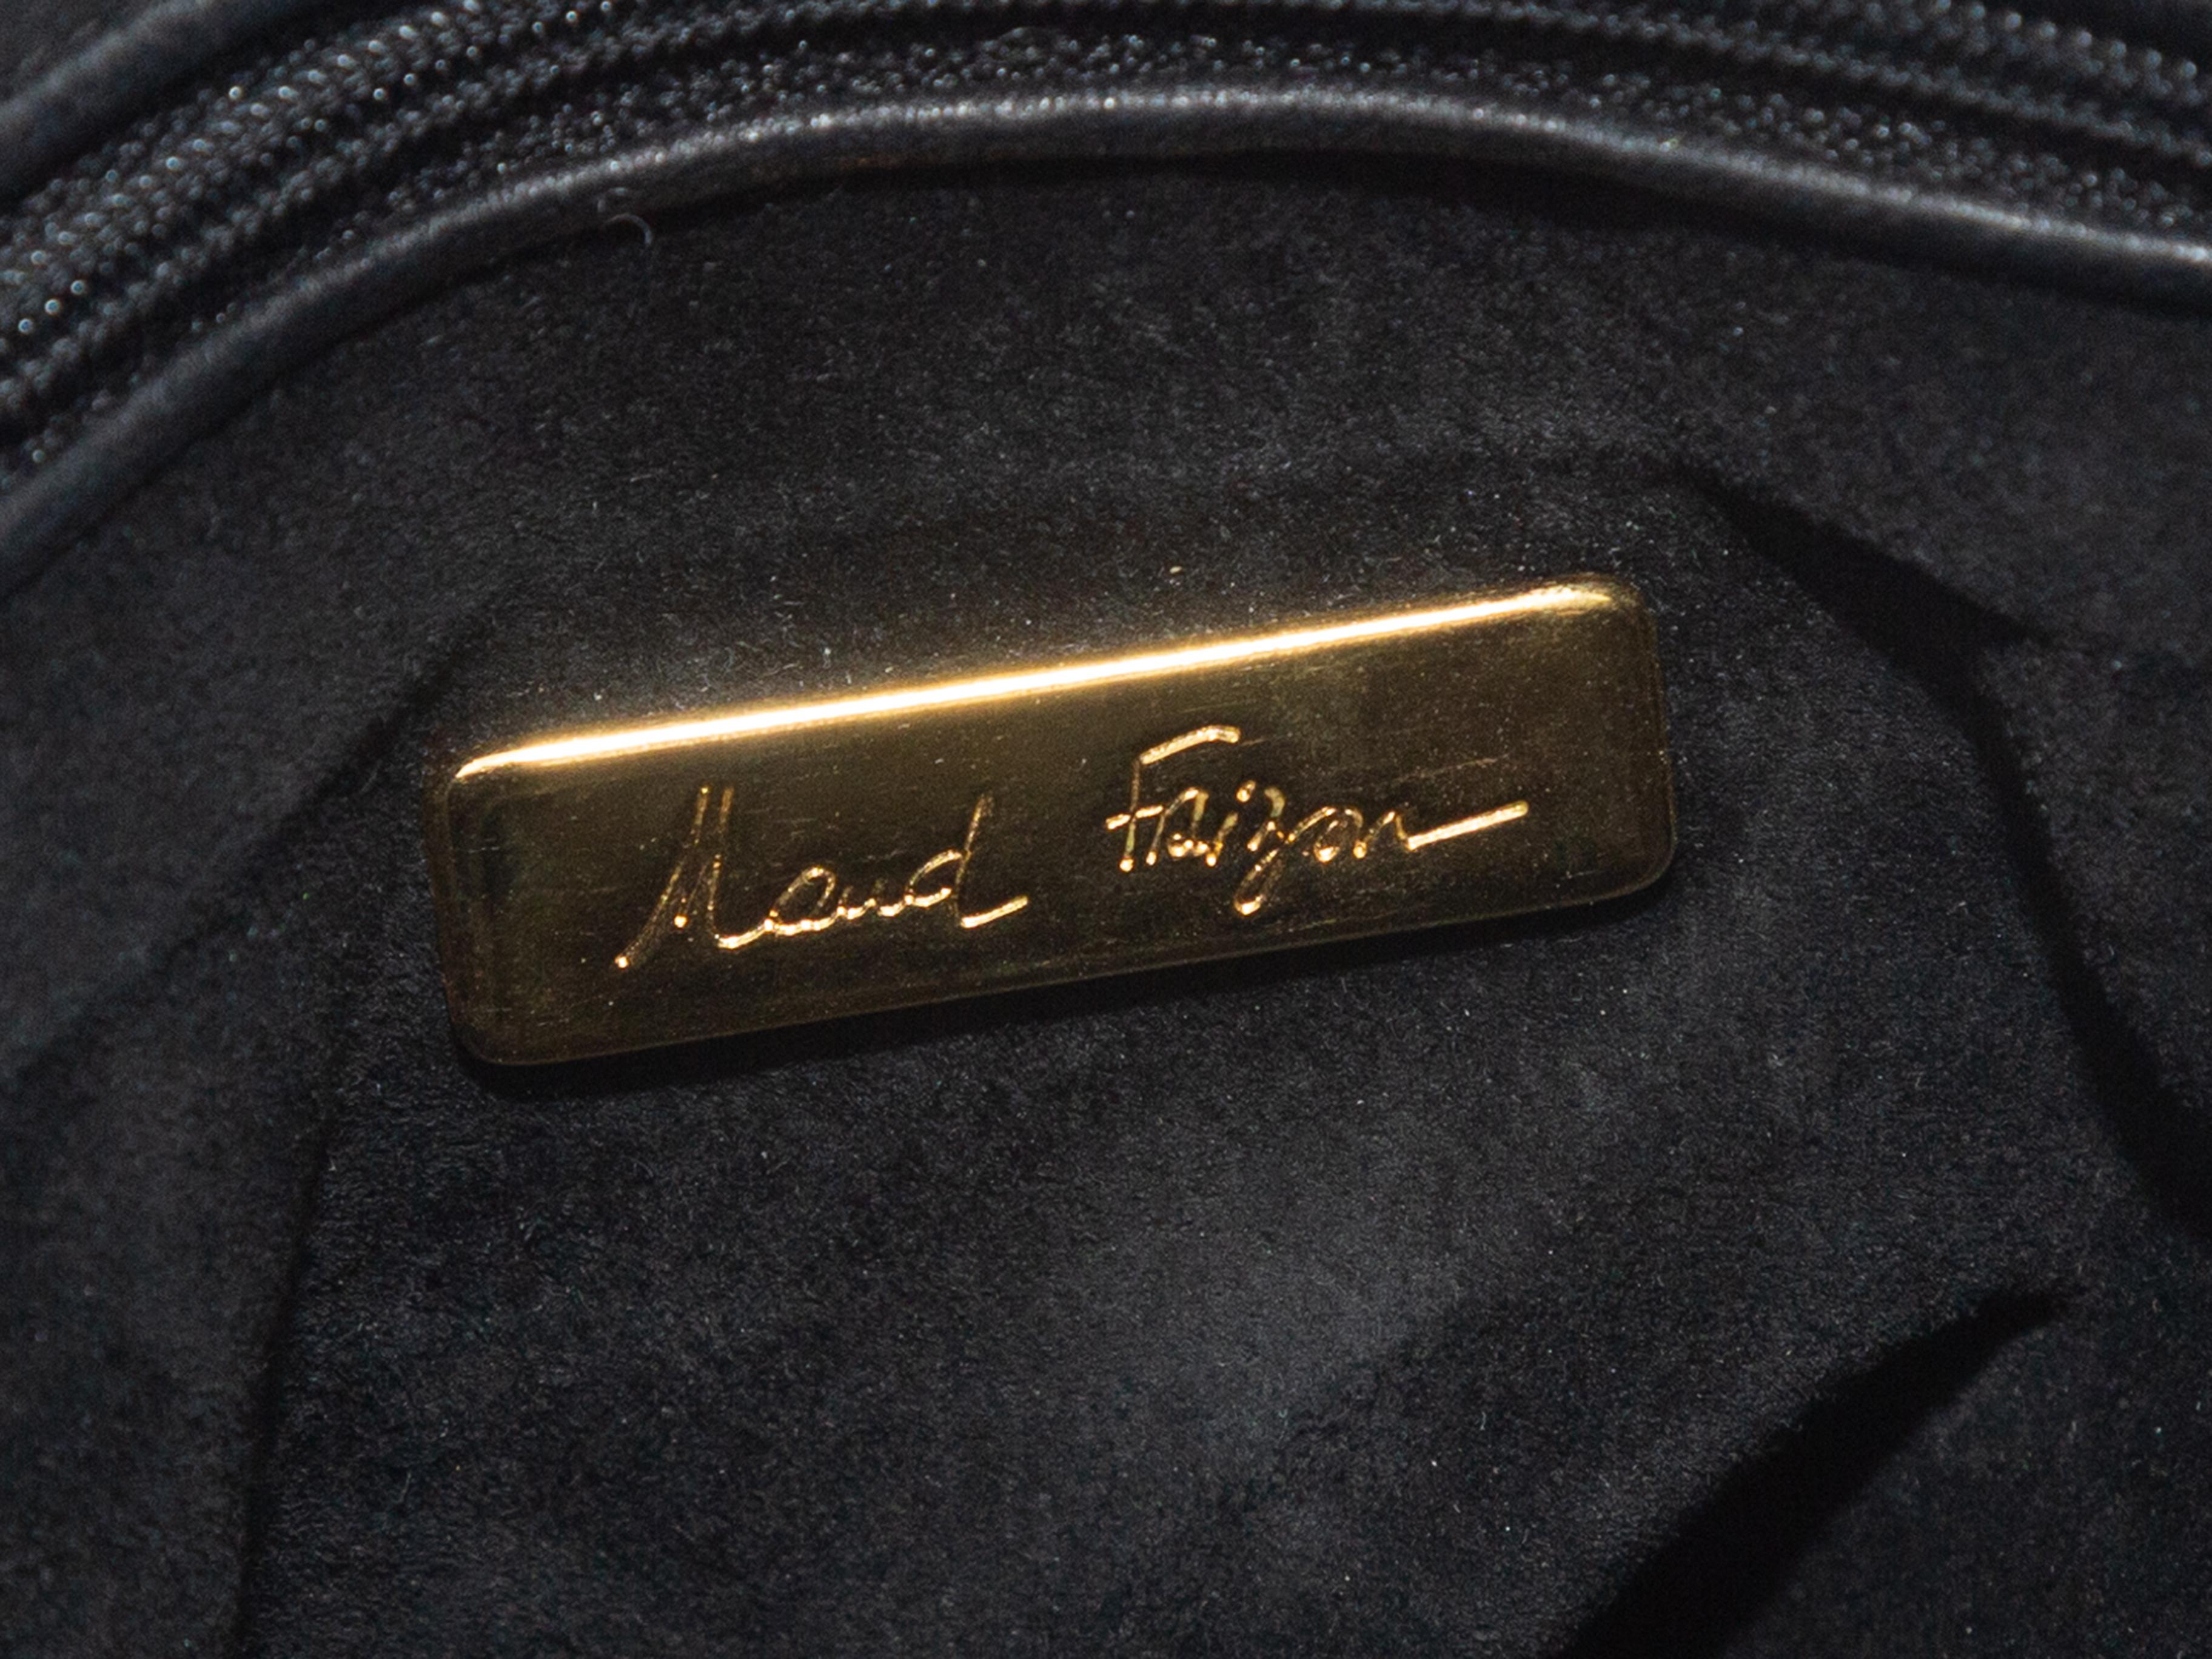 Product details: Vintage black leather handbag by Maud Frizon. Dual straps featuring stud accents. 17